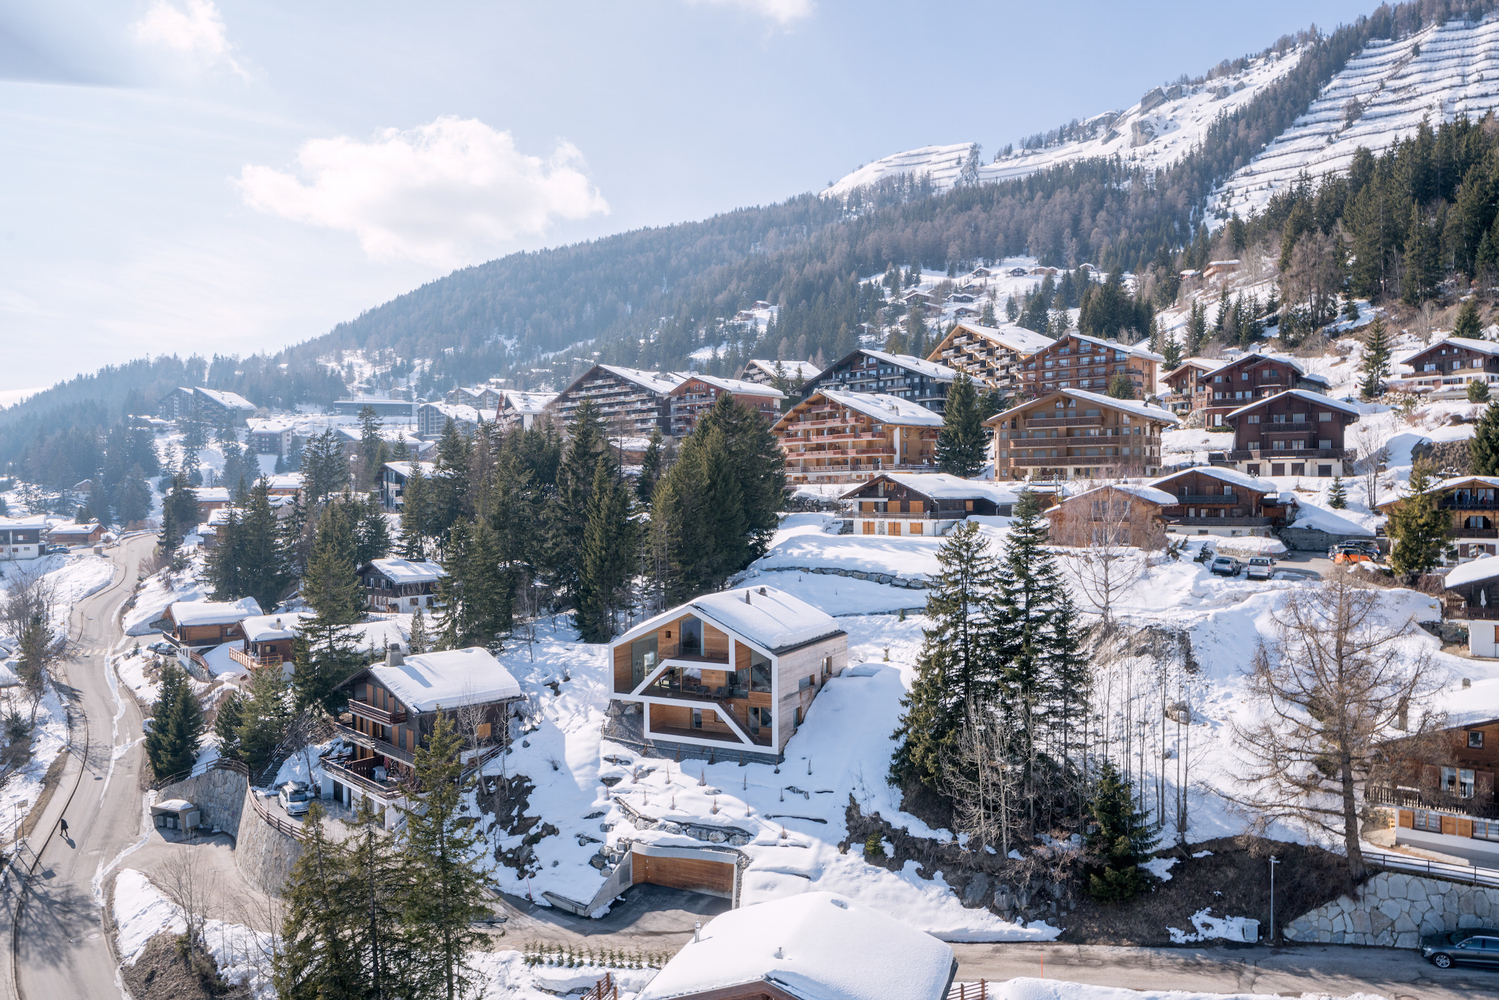 General 1499x1000 modern house cabin landscape snow winter snowy mountain Switzerland